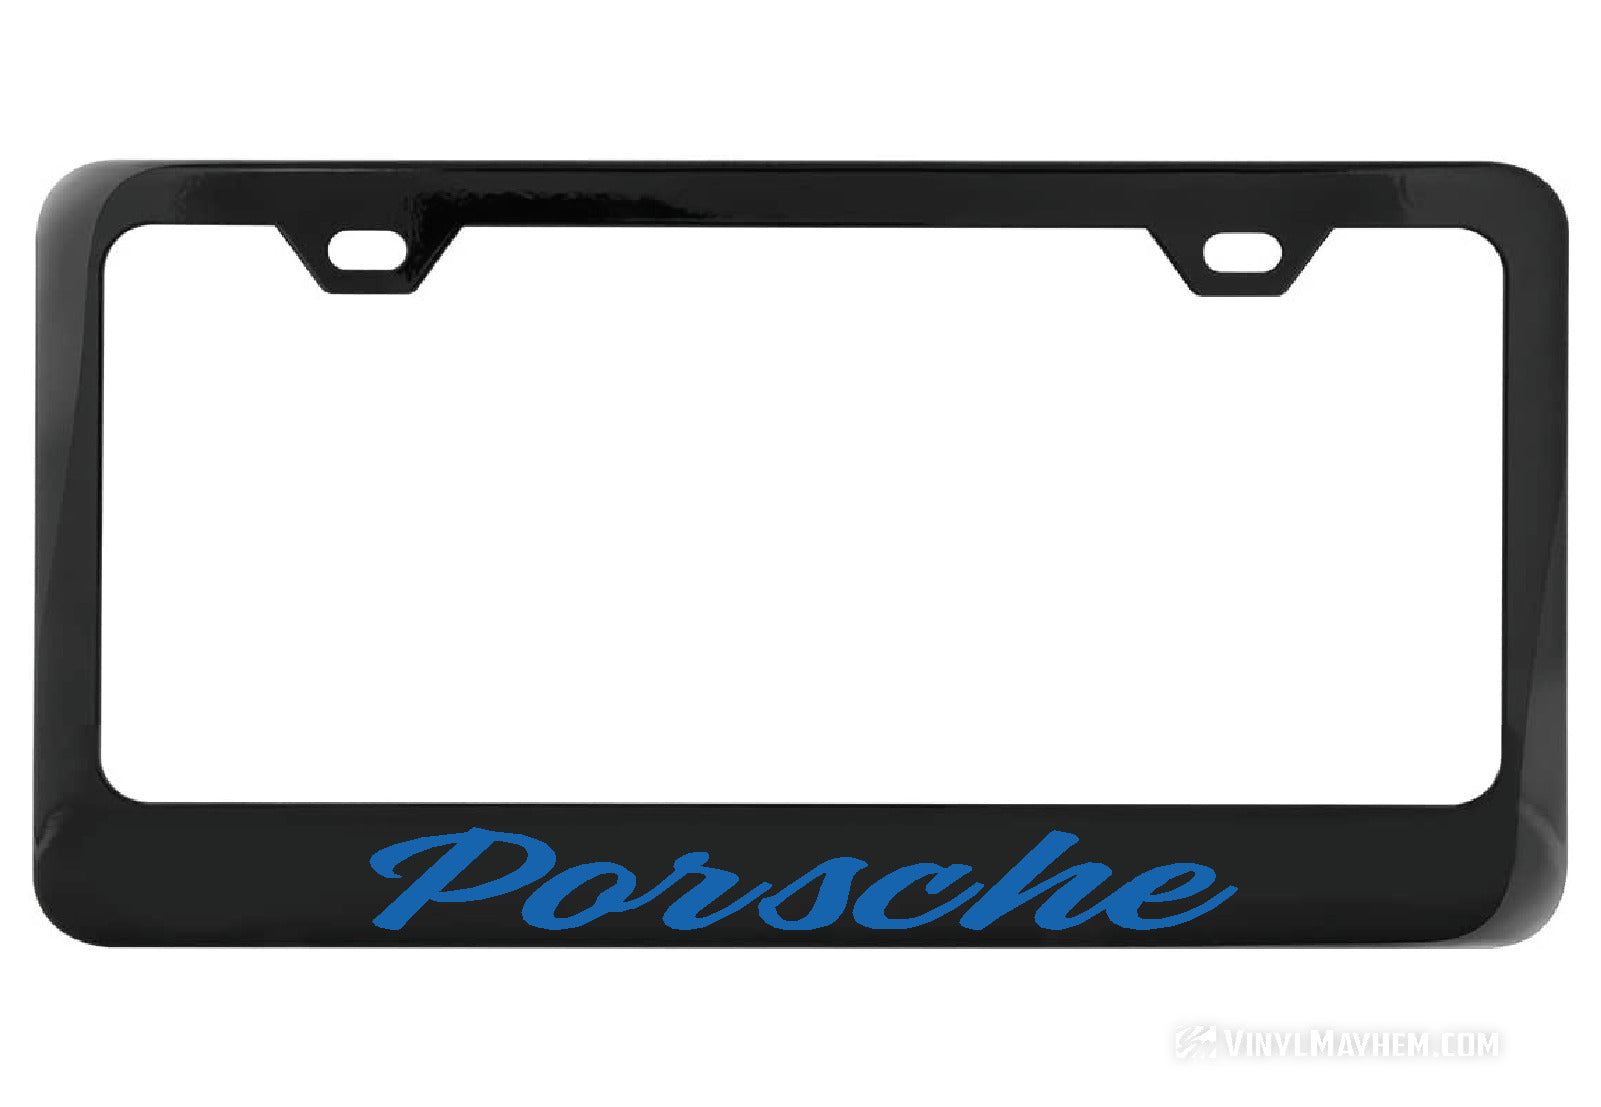 Porsche black license plate frame